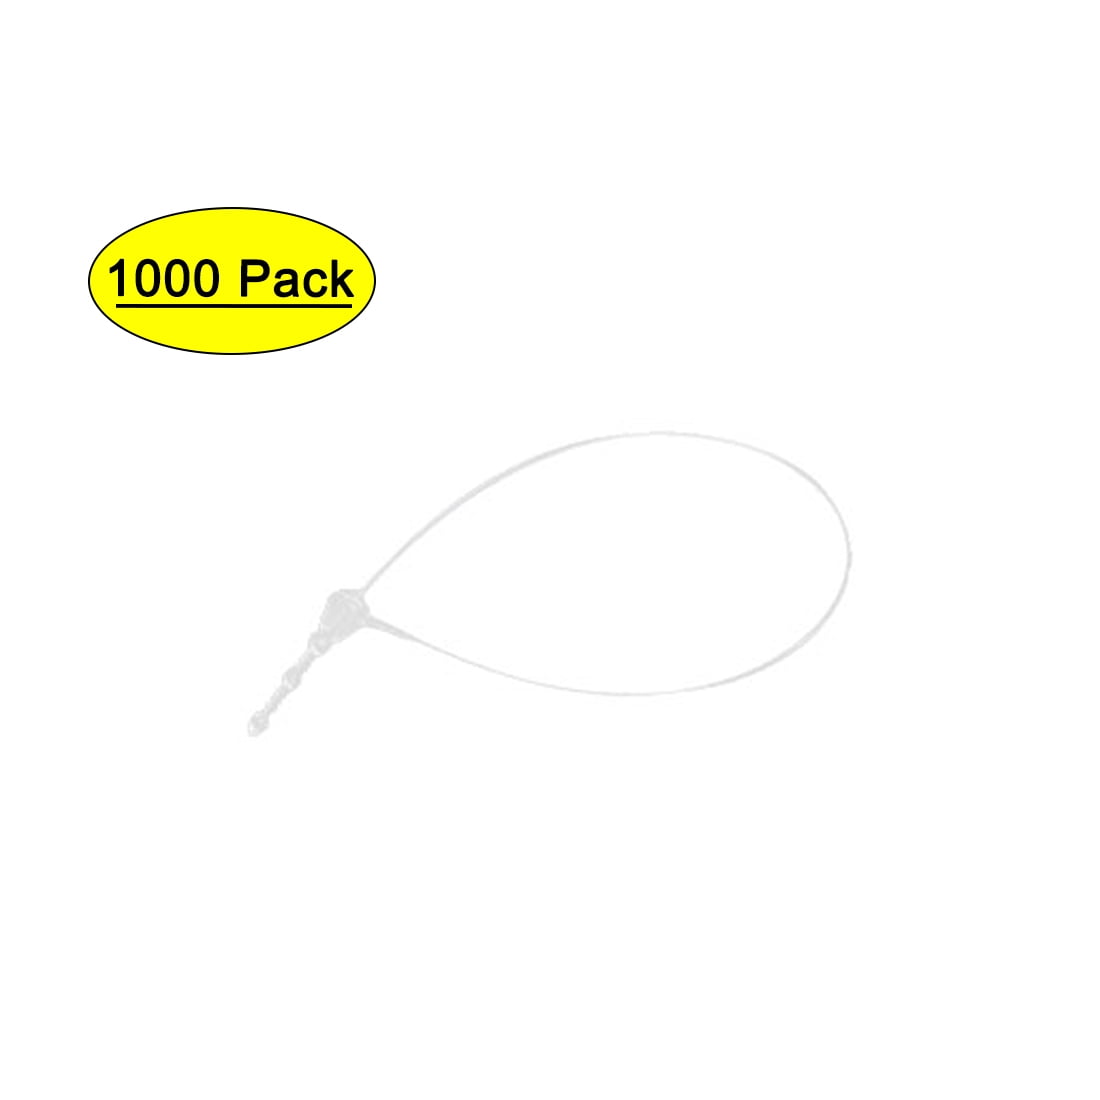 1000 Pcs Loop Locks Plastic Snap Lock Pin Security Tag Label Fastener Tool USA 